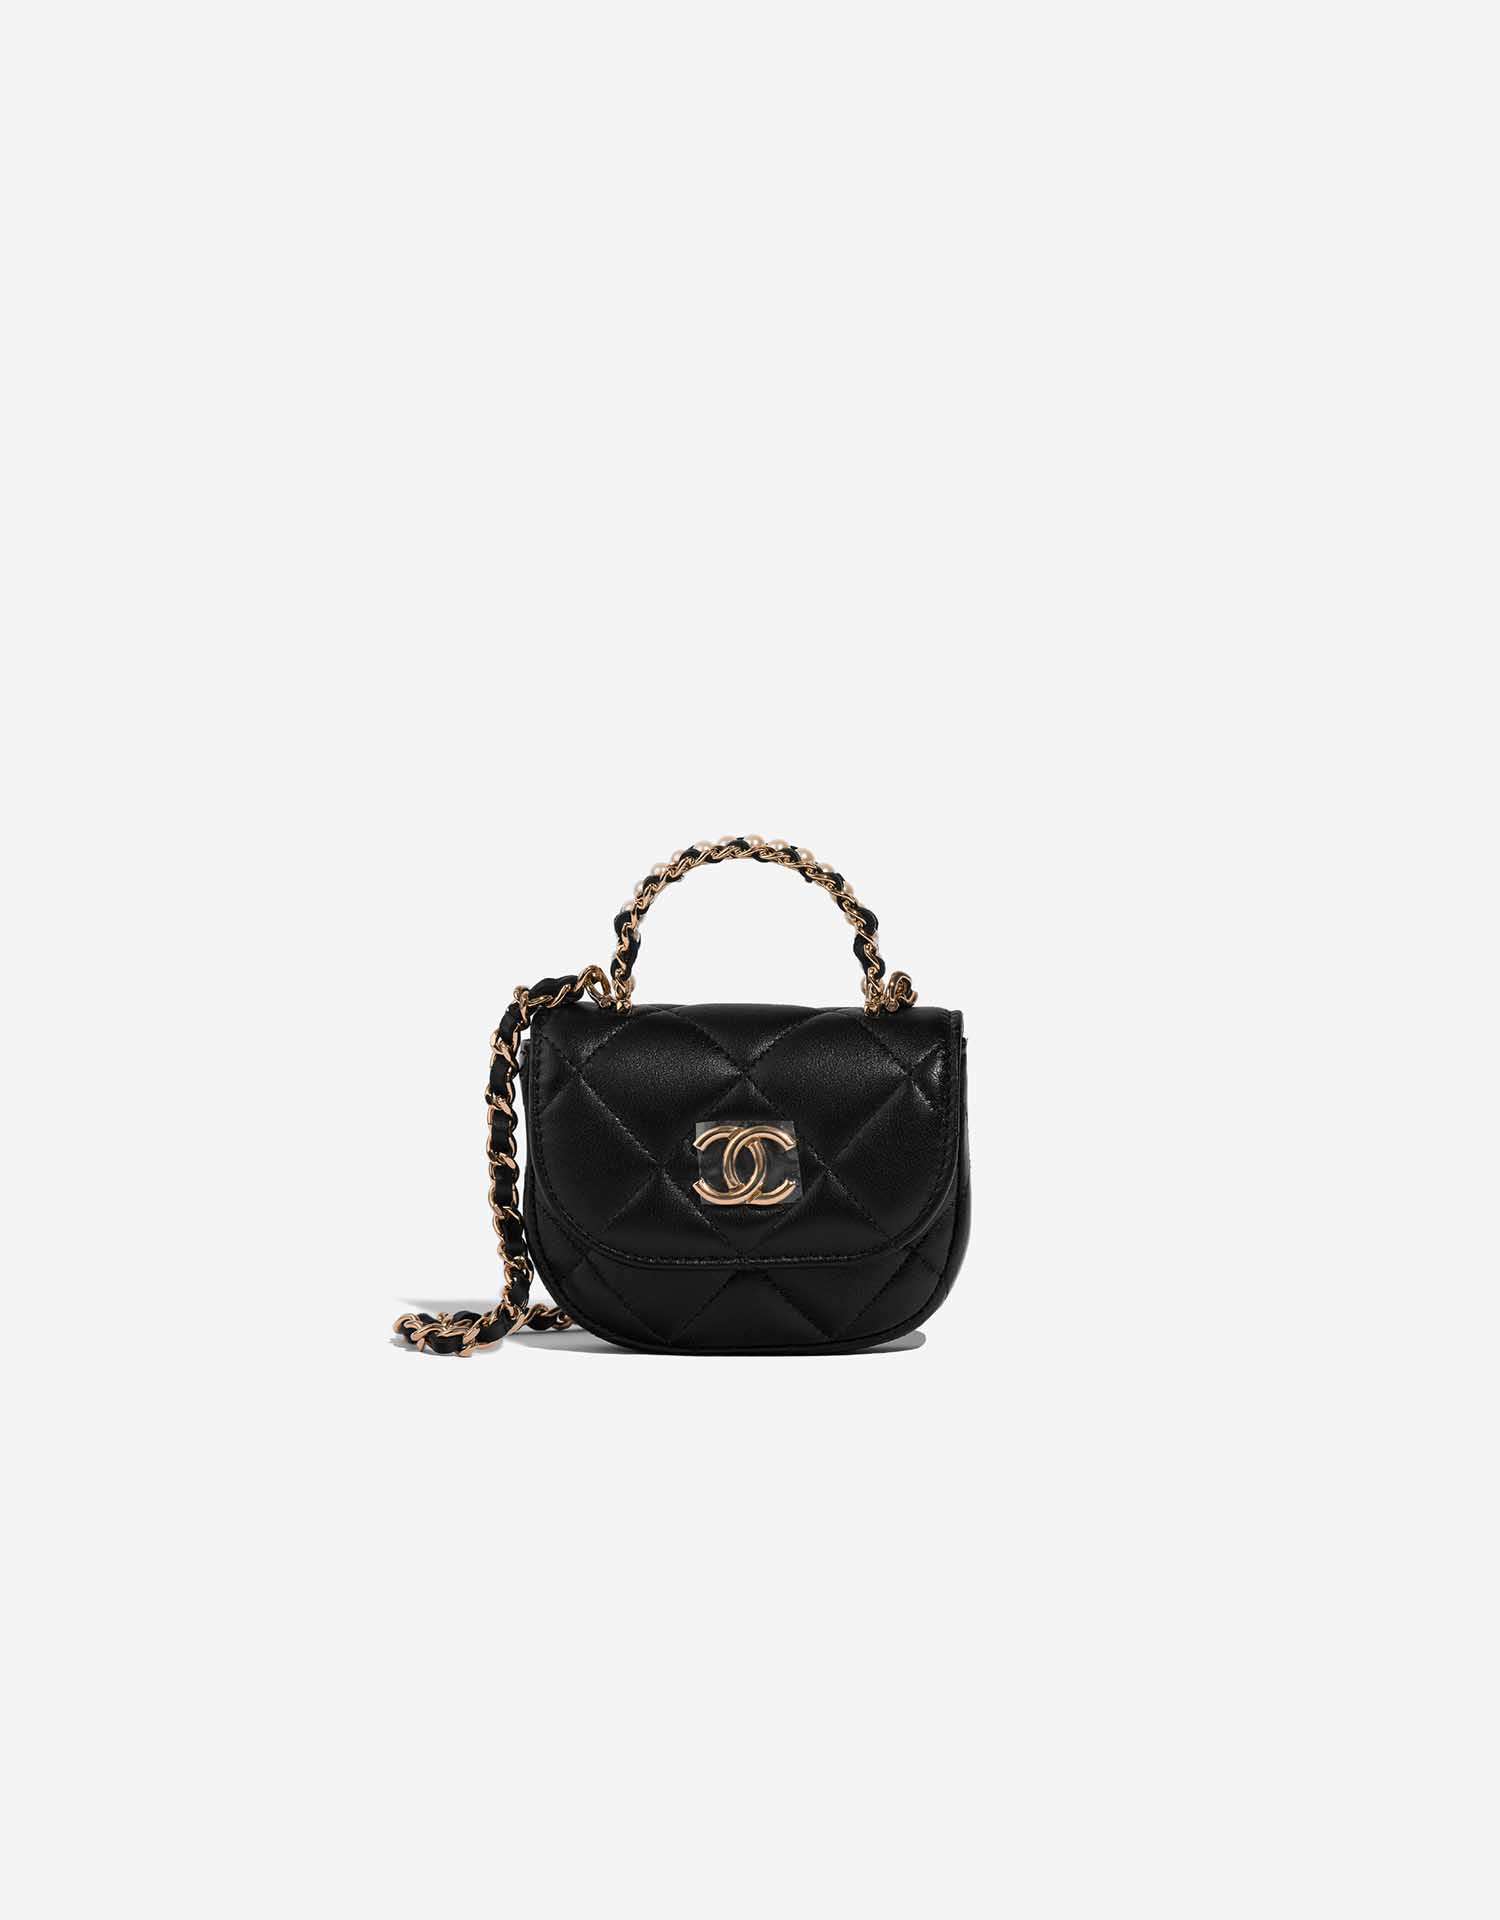 classic chanel flap bag small black